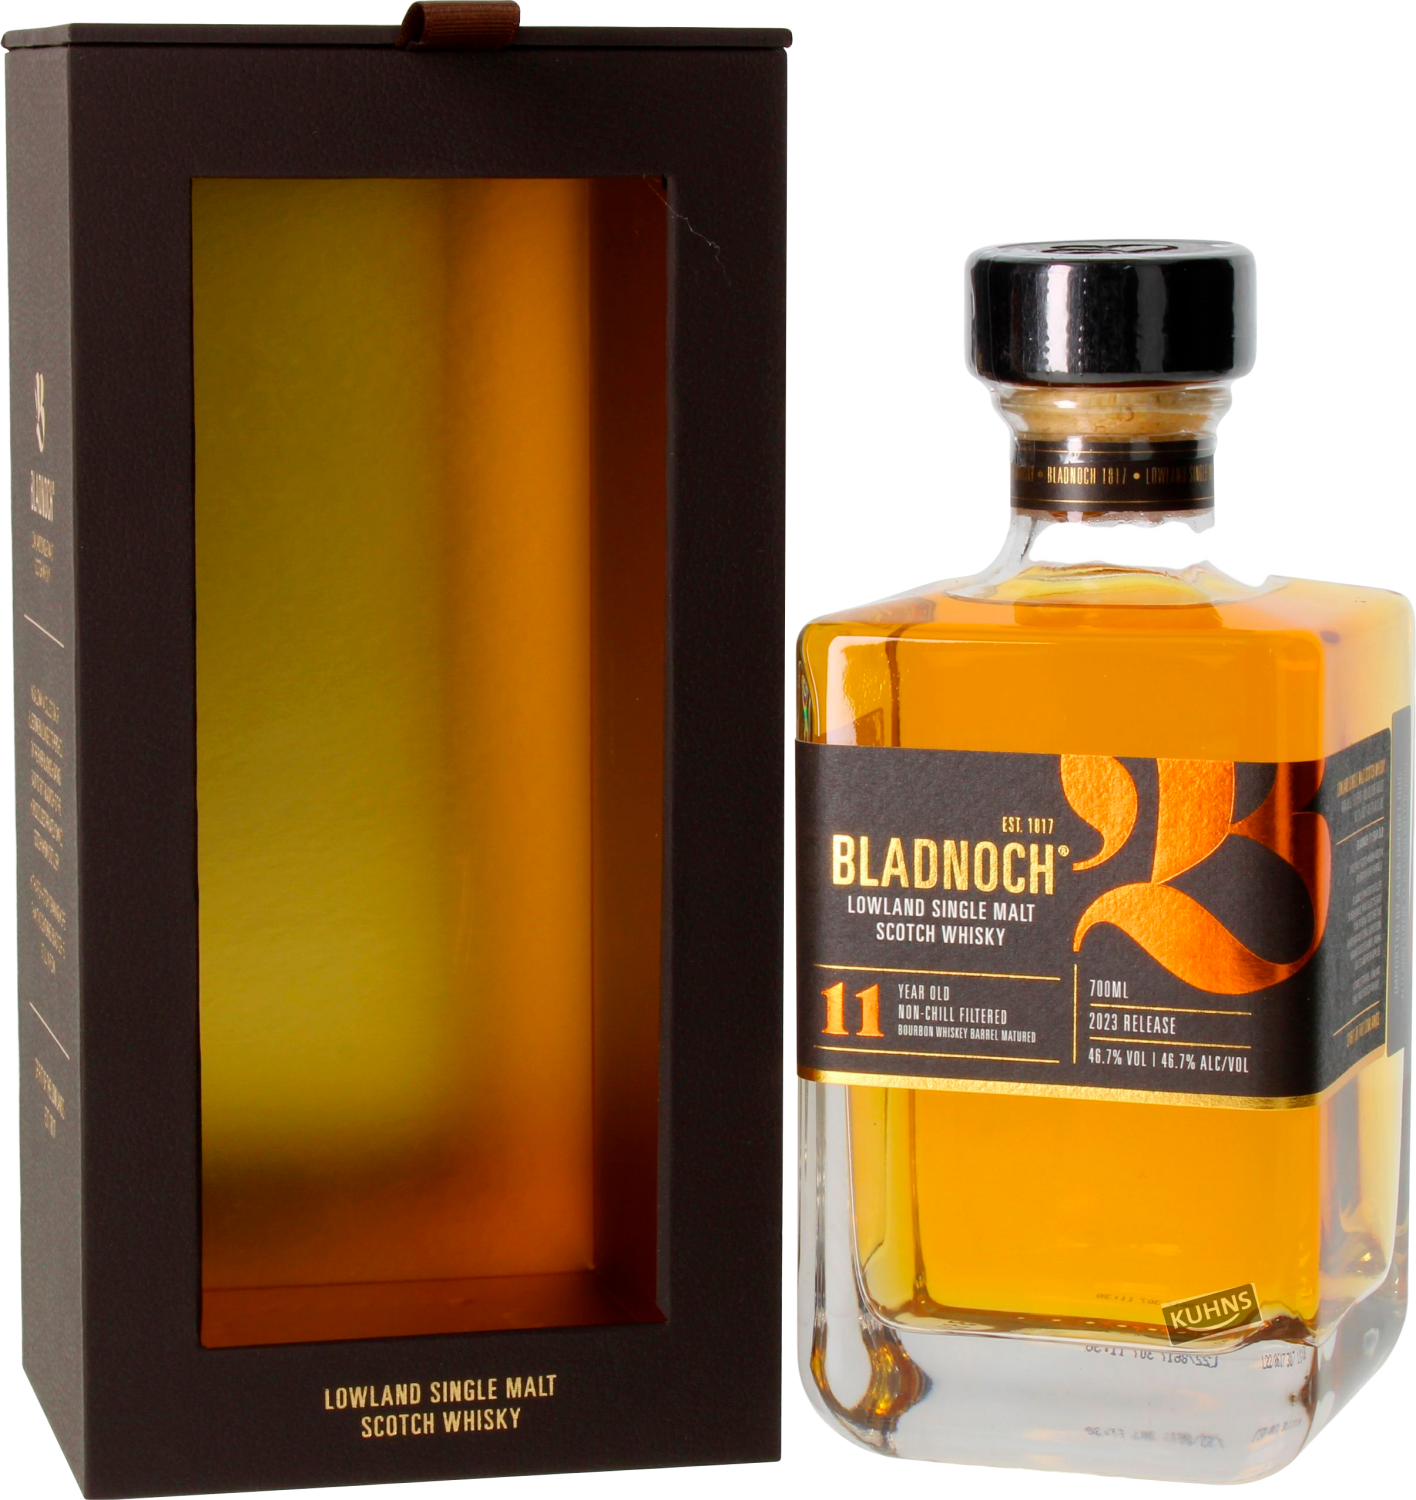 Bladnoch 11 Years Old Single Malt Scotch Whisky (gift box)